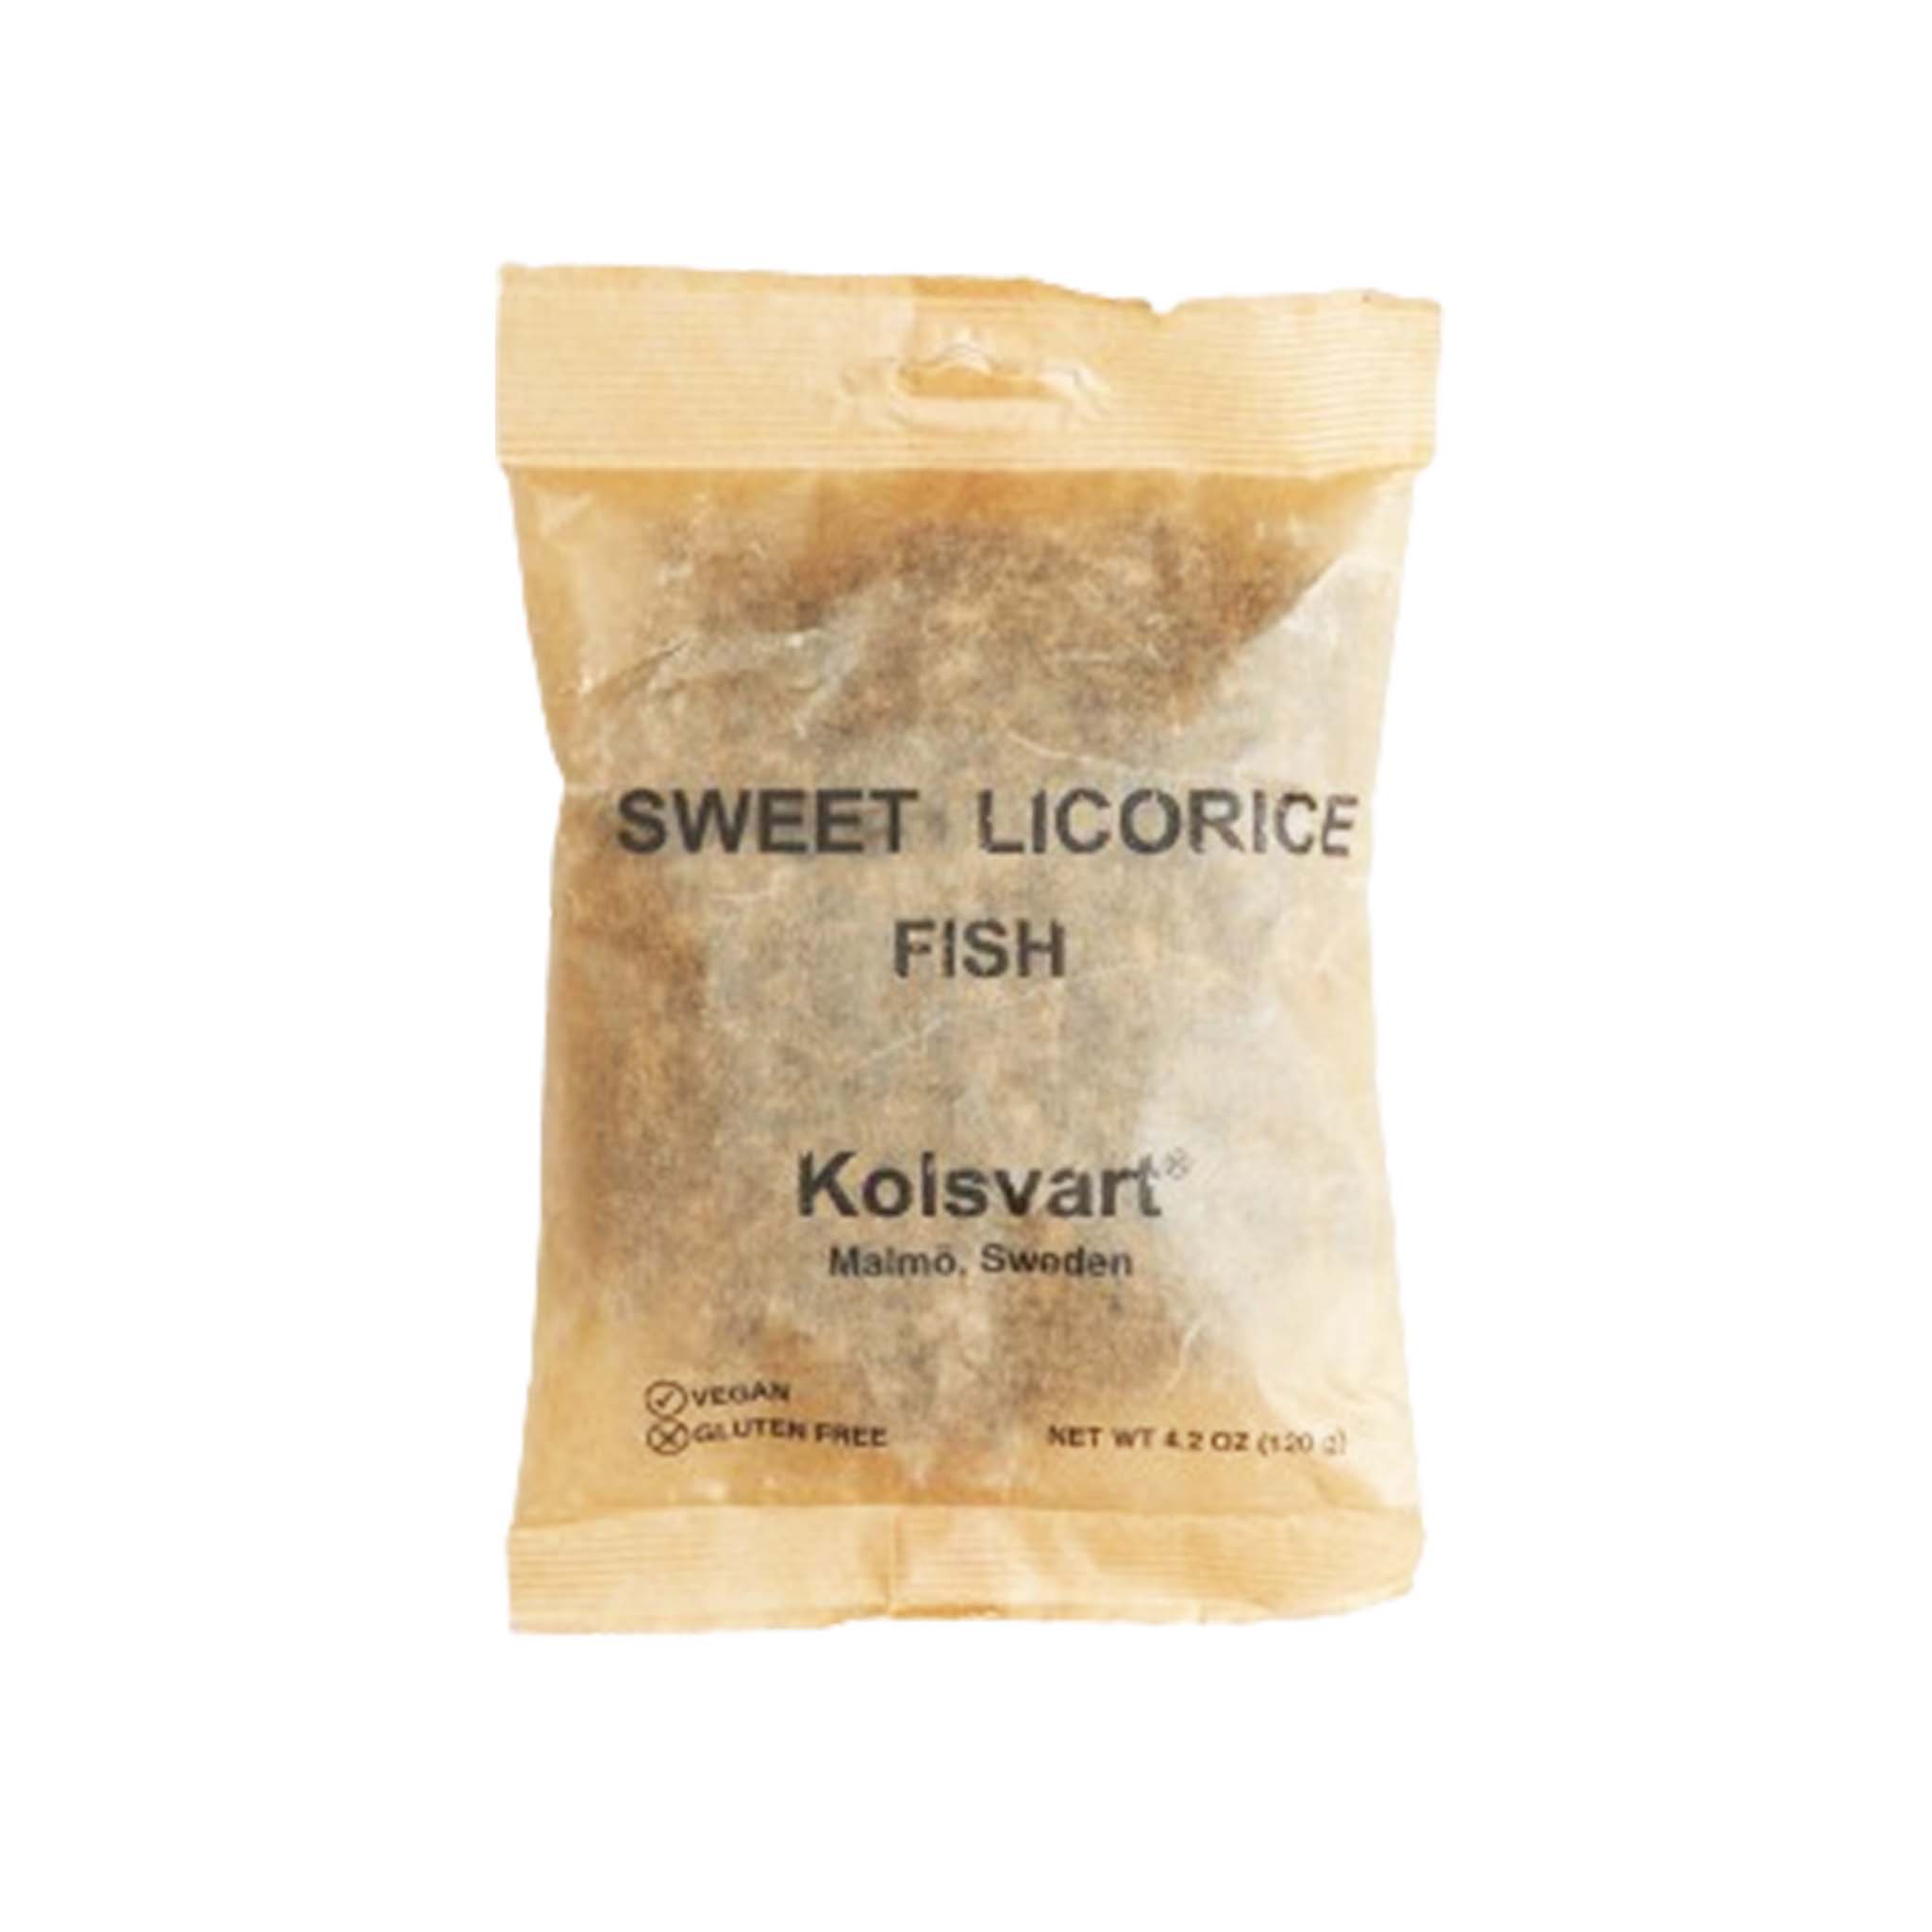 KOLSVART SWEET LICORICE FISH 4.2oz